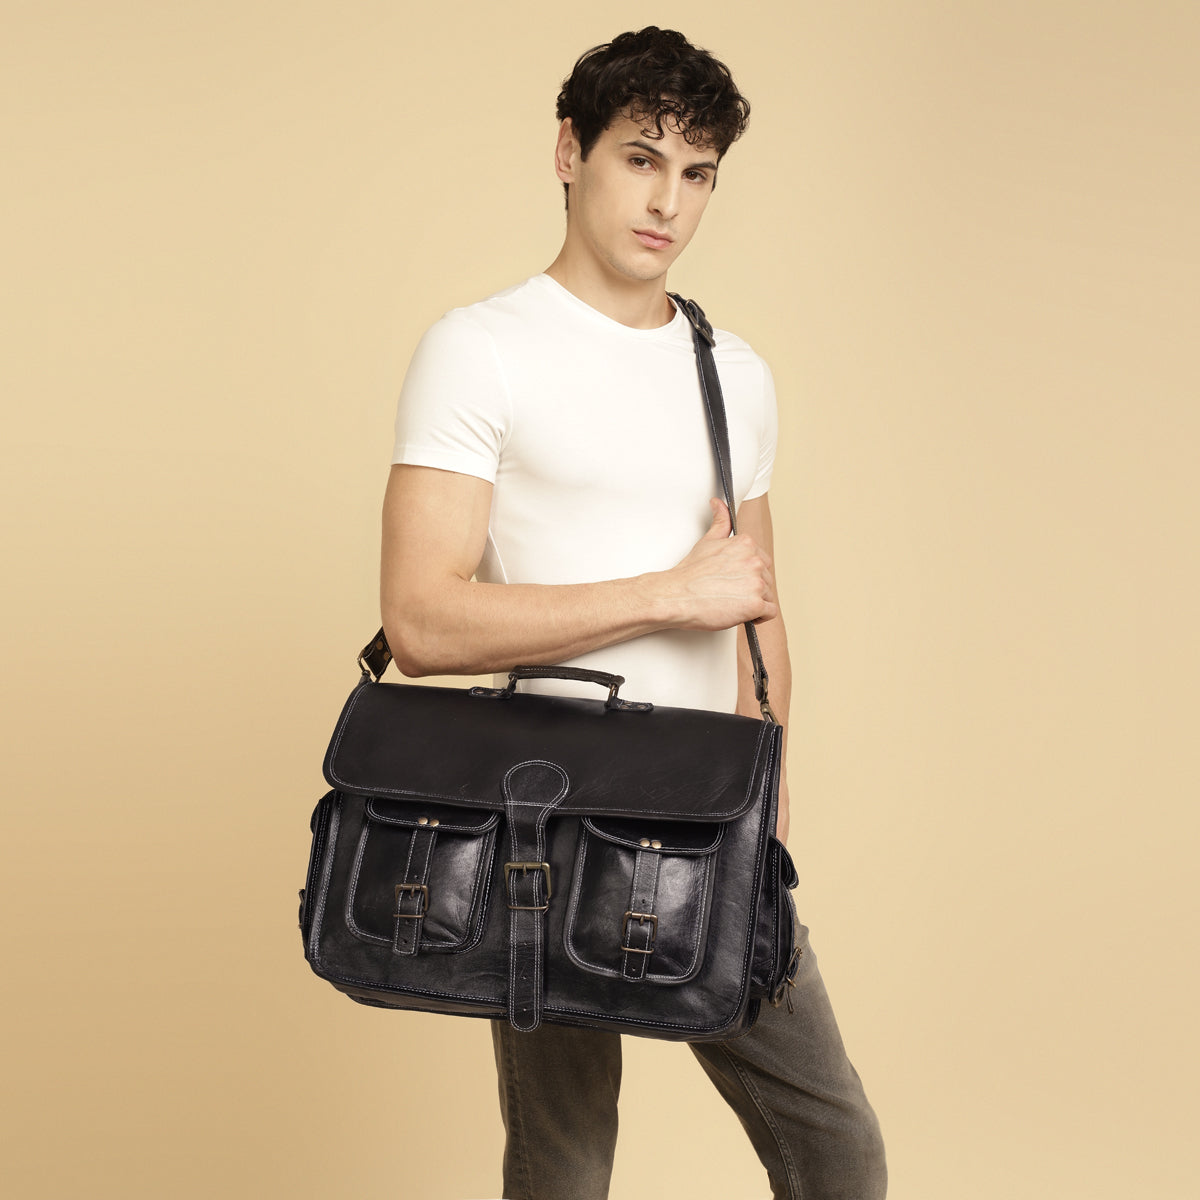 stylish black leather messenger bag